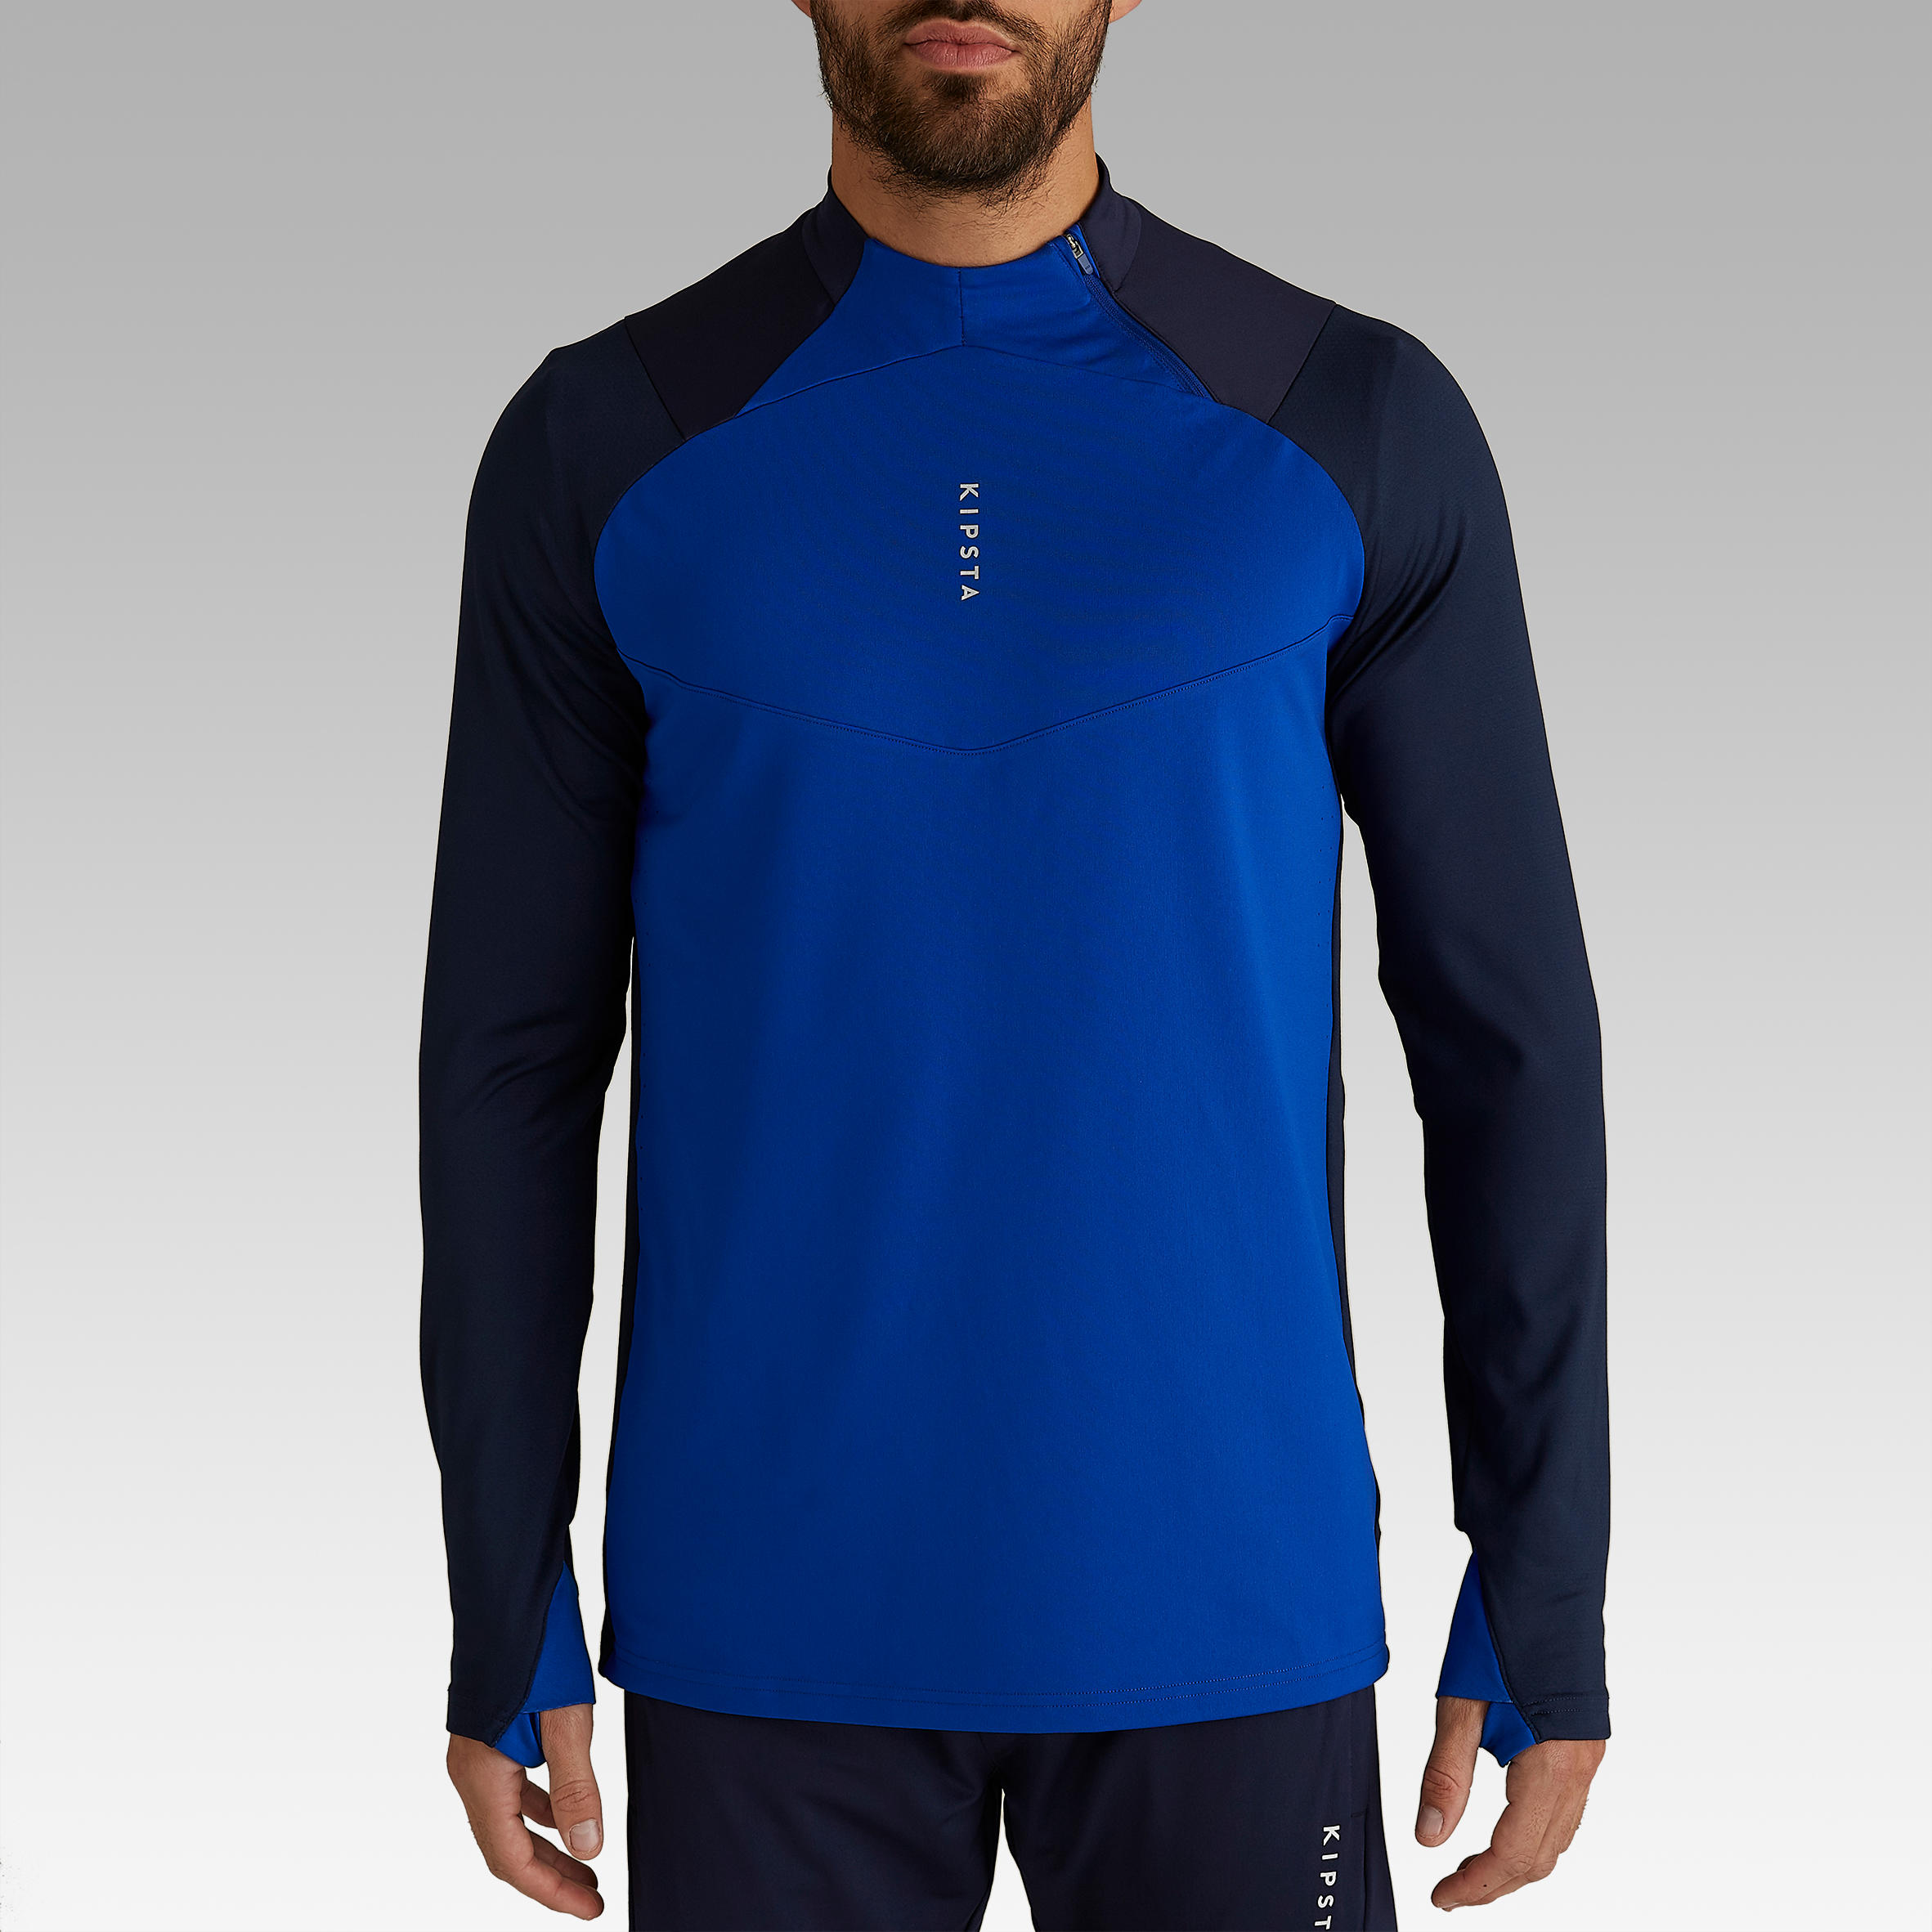 T500 Adult 1/2 Zip Football Sweatshirt - Blue 2/14